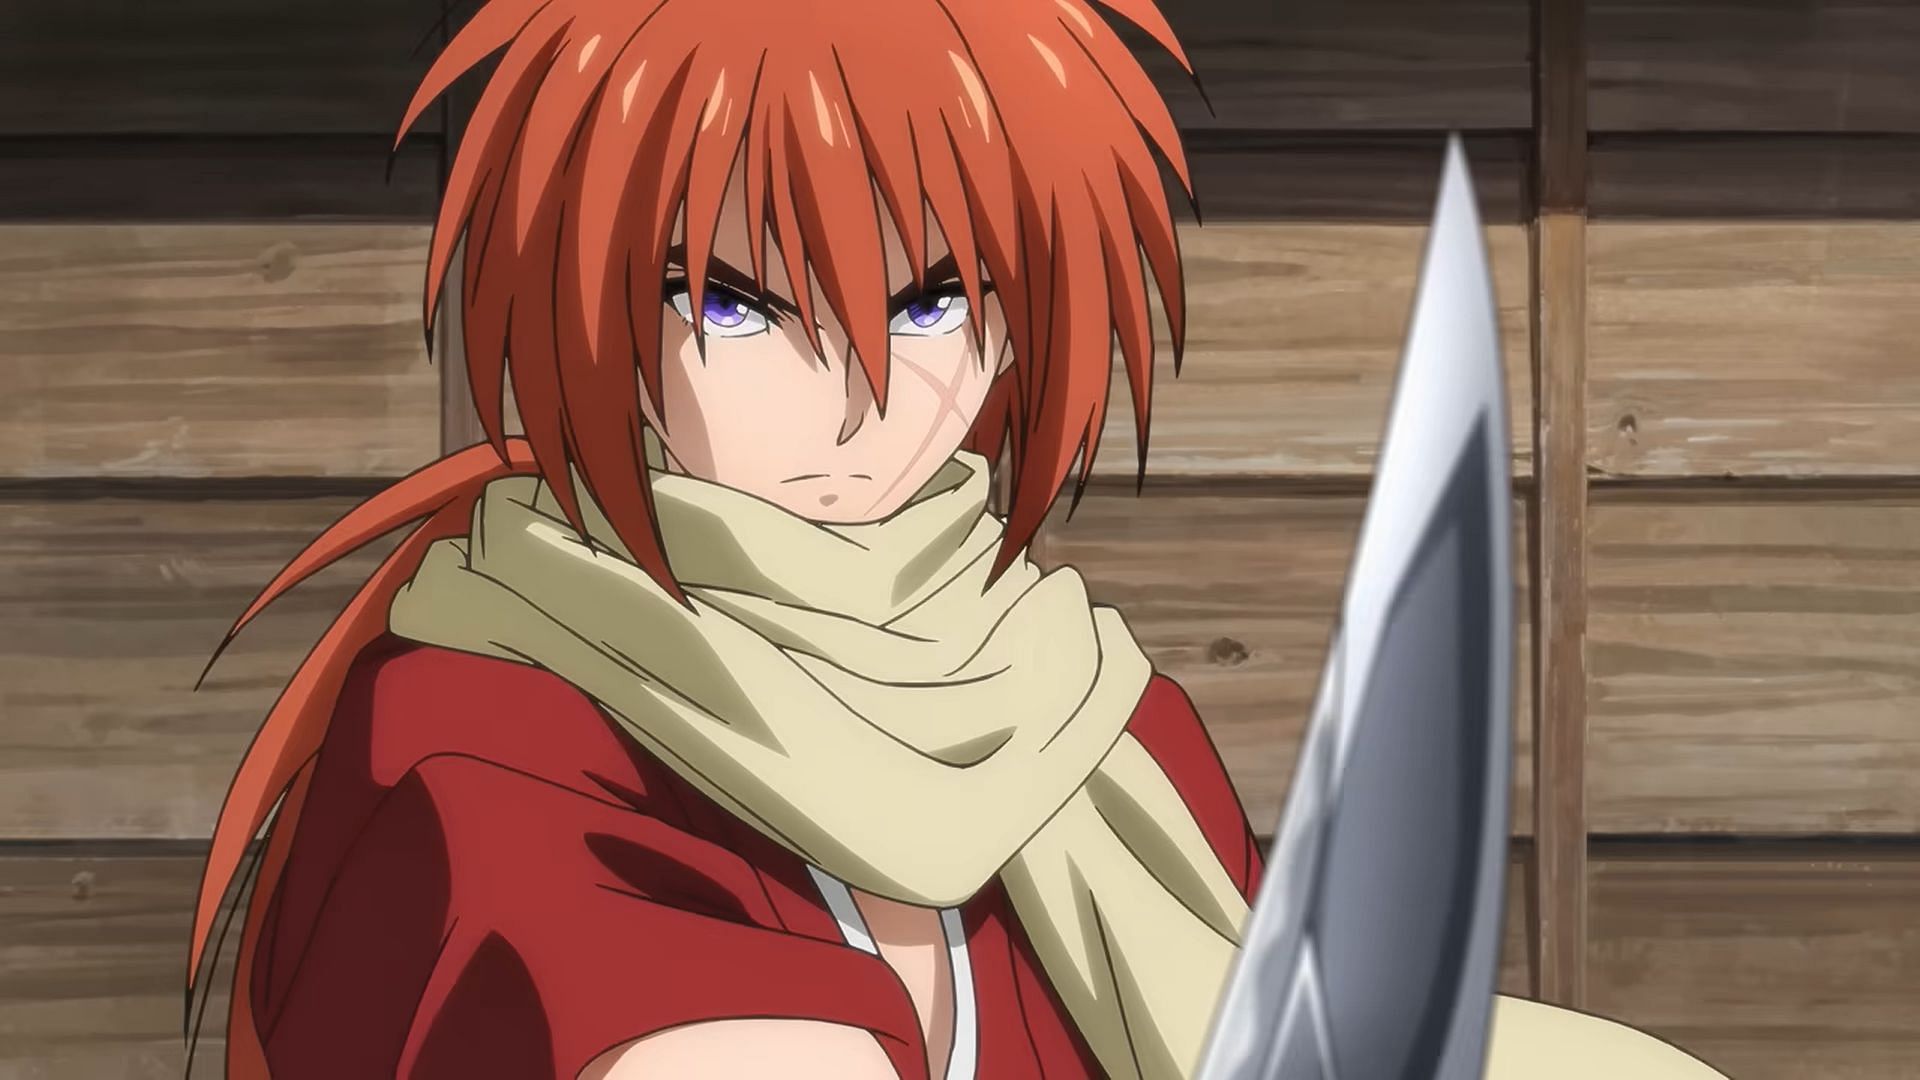 Kenshin Himura as seen in the anime 